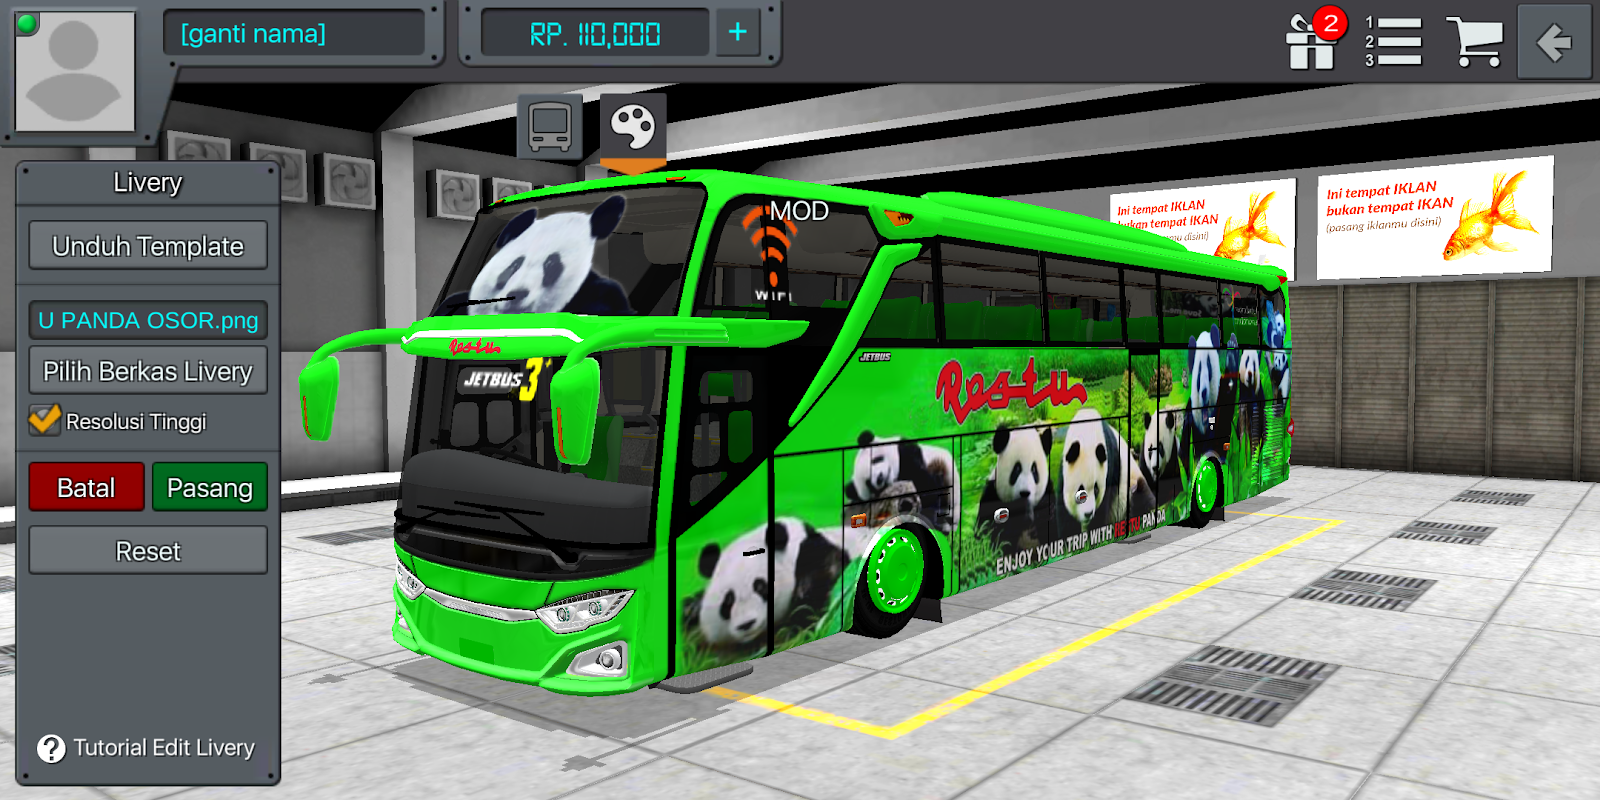 Download Livery Bussid Restu Panda Shd - livery truck anti ...